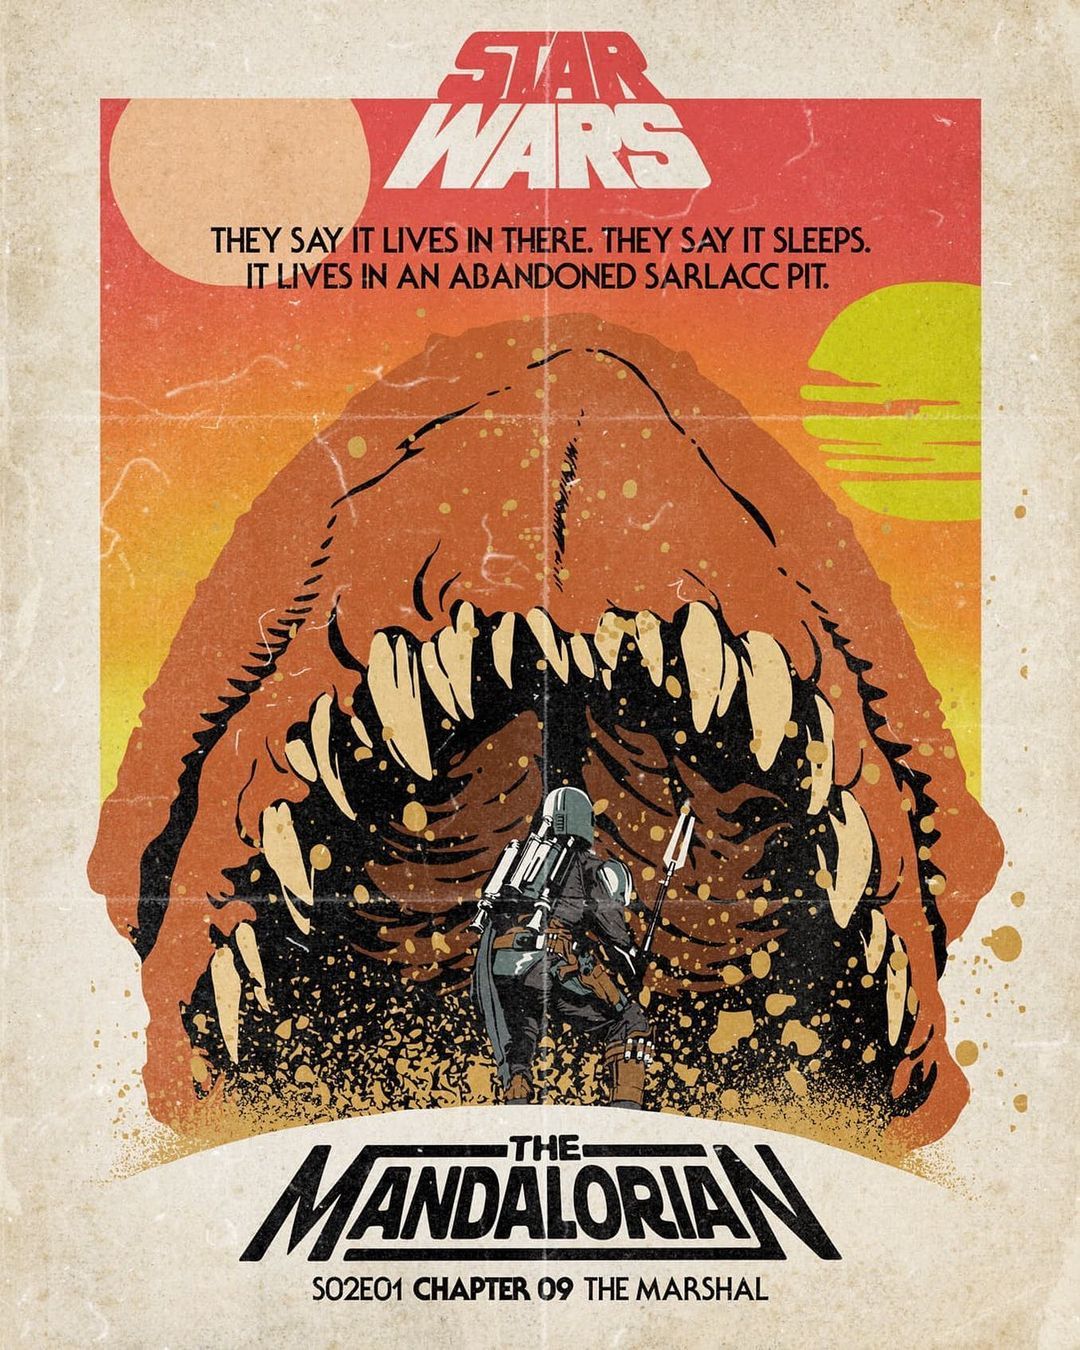 Vintage Mandalorian Star Wars Style Poster